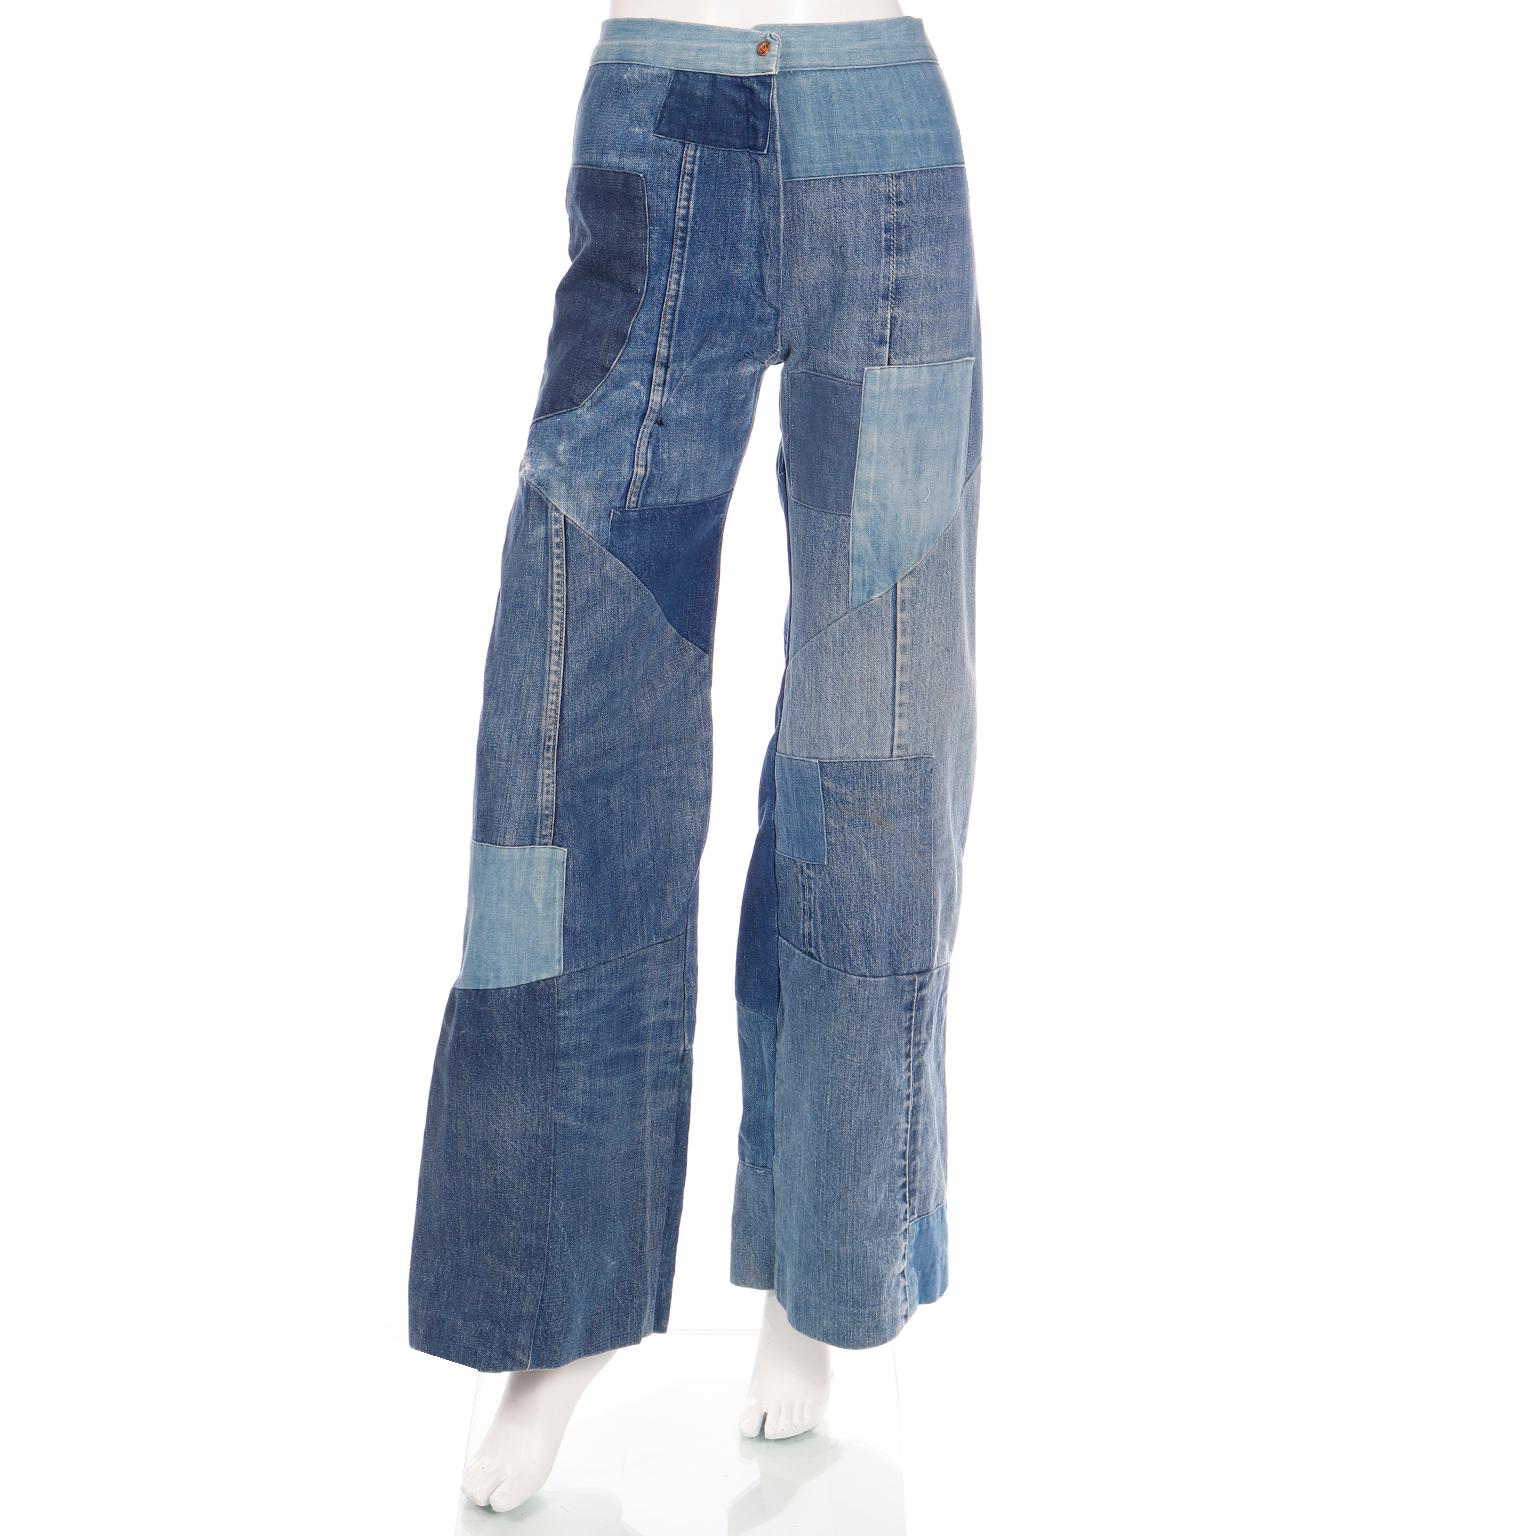 Simis Vintage 1970s Patchwork Denim Jeans and Button Front Shirt 2 Pc Outfit 1